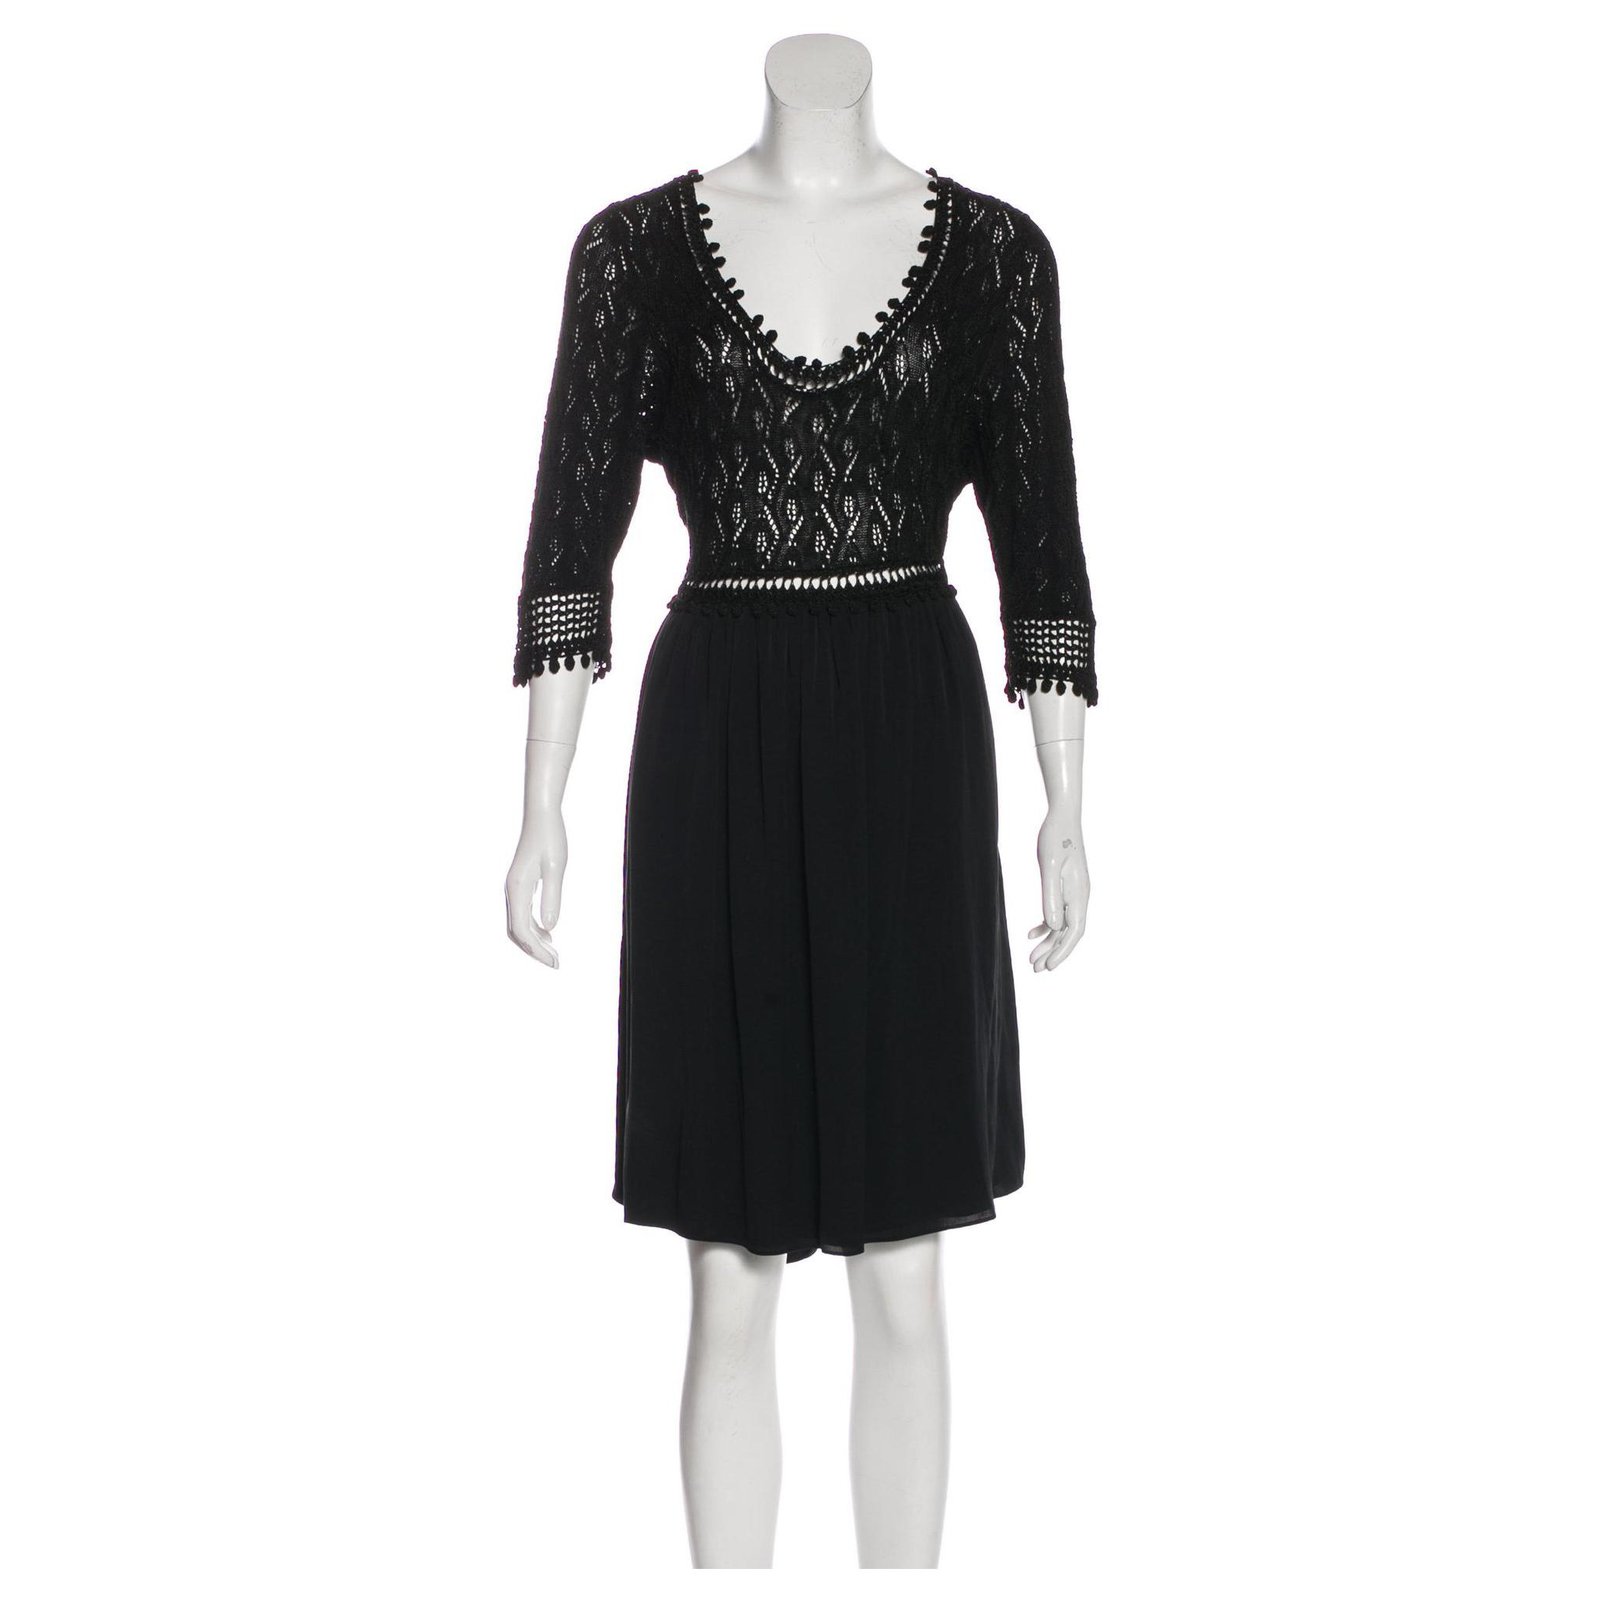 dvf black lace dress